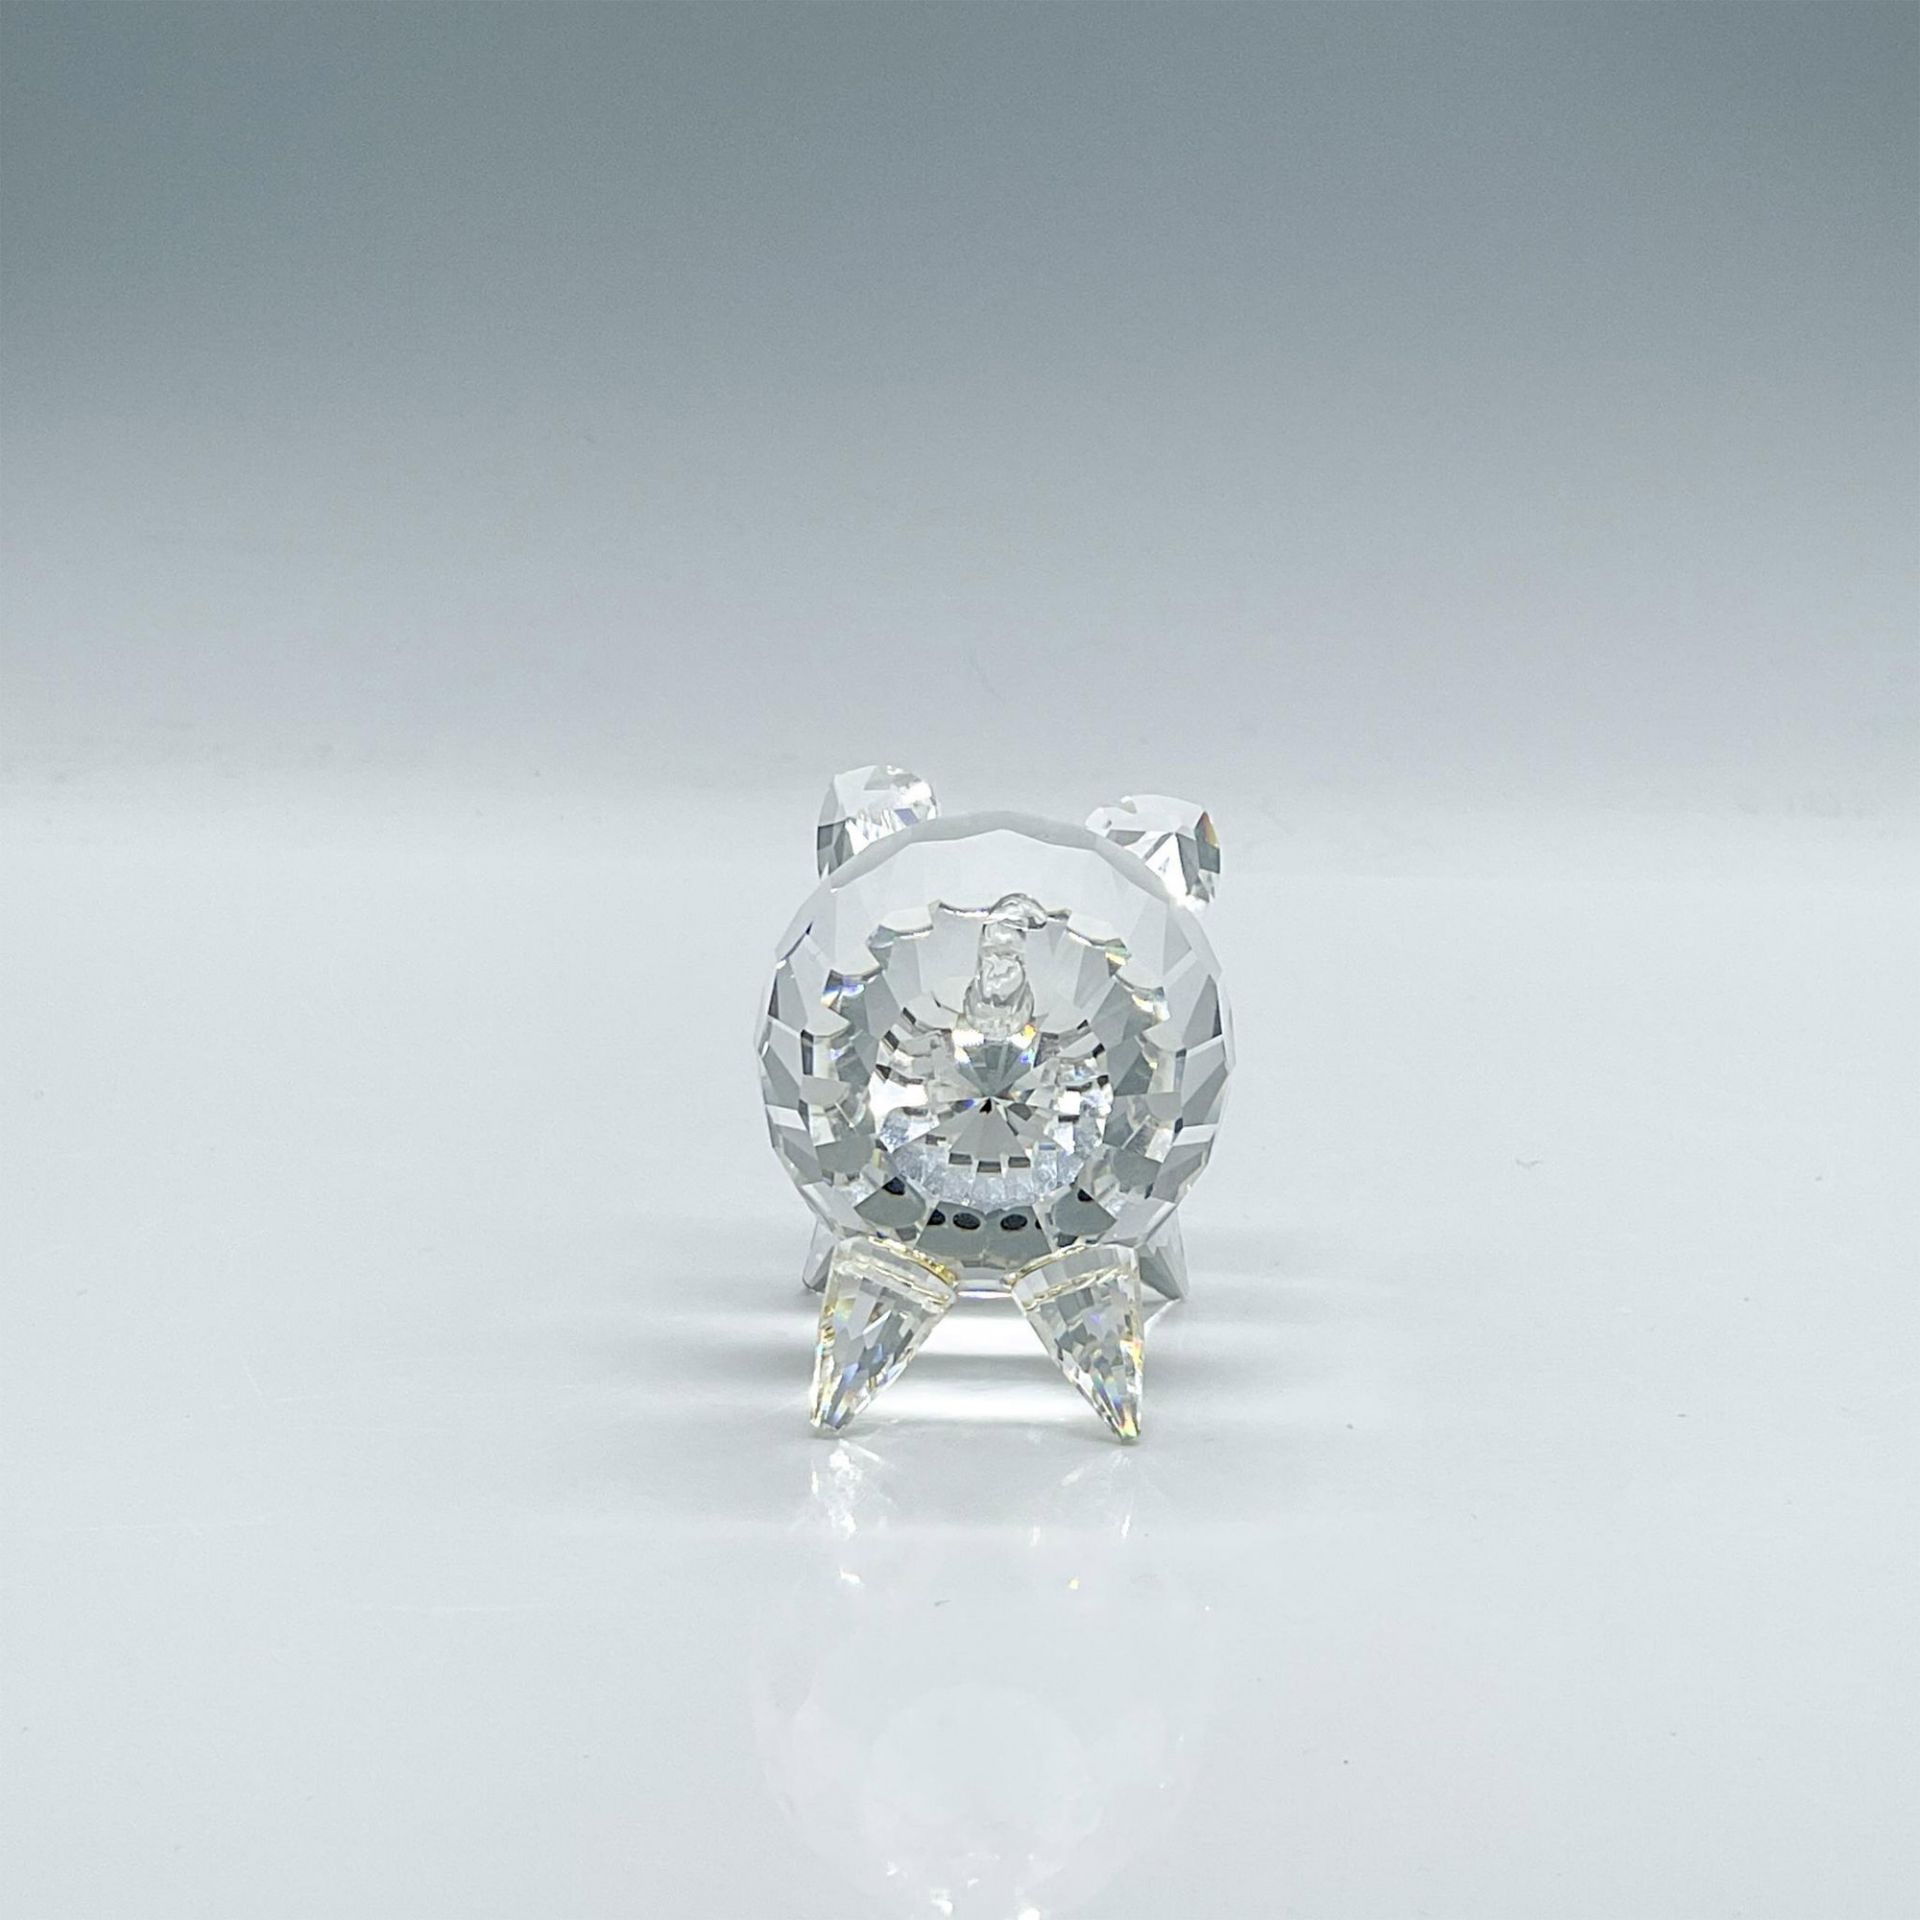 Swarovski Crystal Figurine, Pig - Image 2 of 4